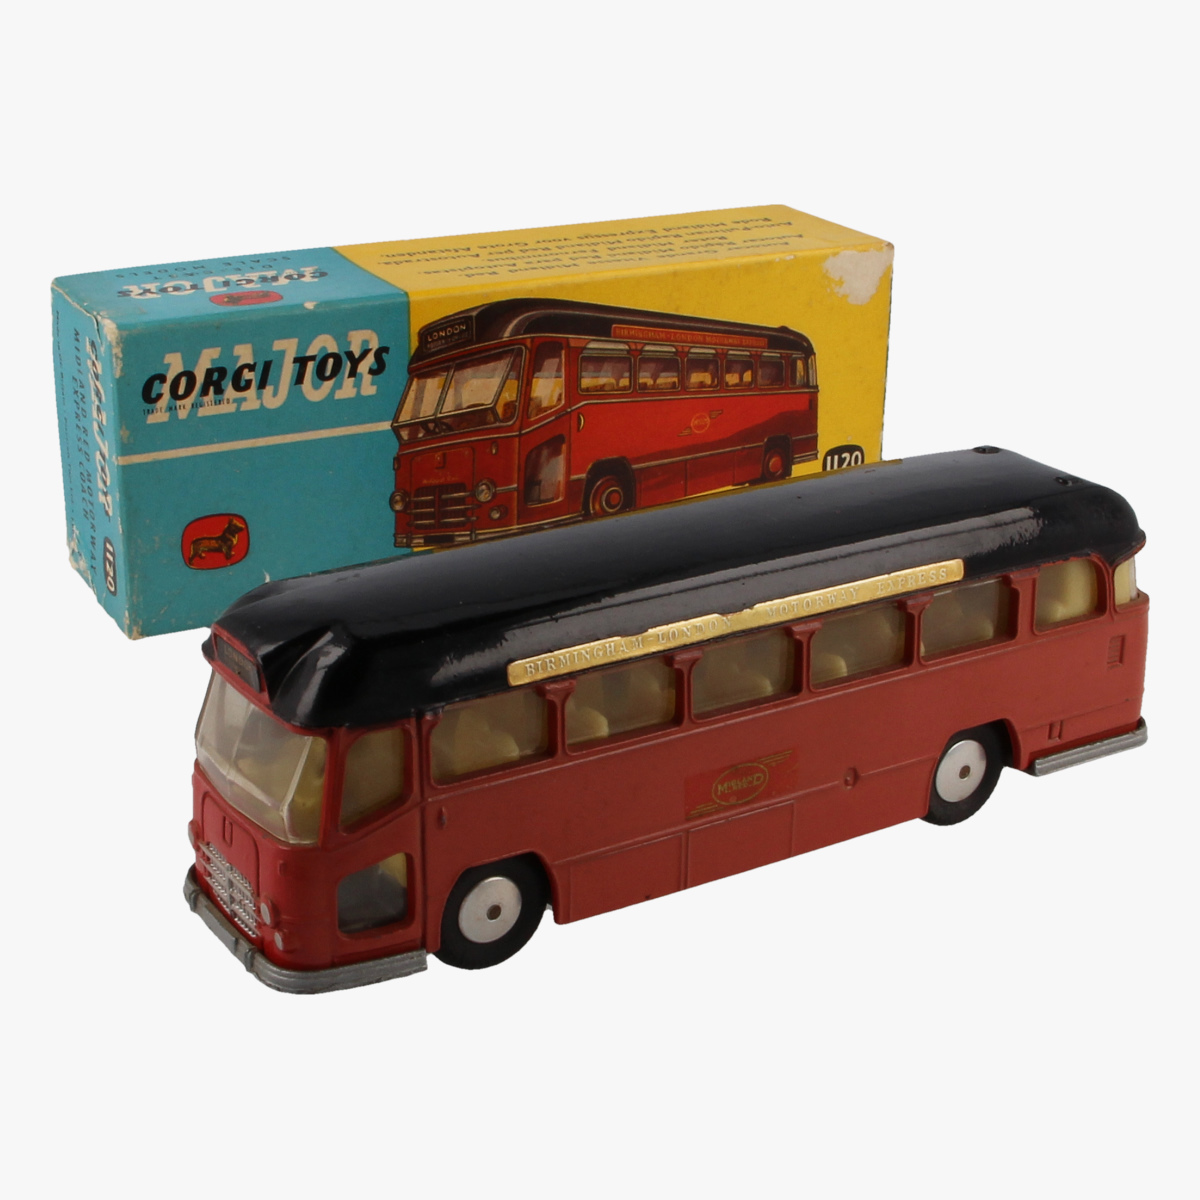 Afbeeldingen van Corgi Toys. Midland Red Motorway Express Coach. Nr.1120